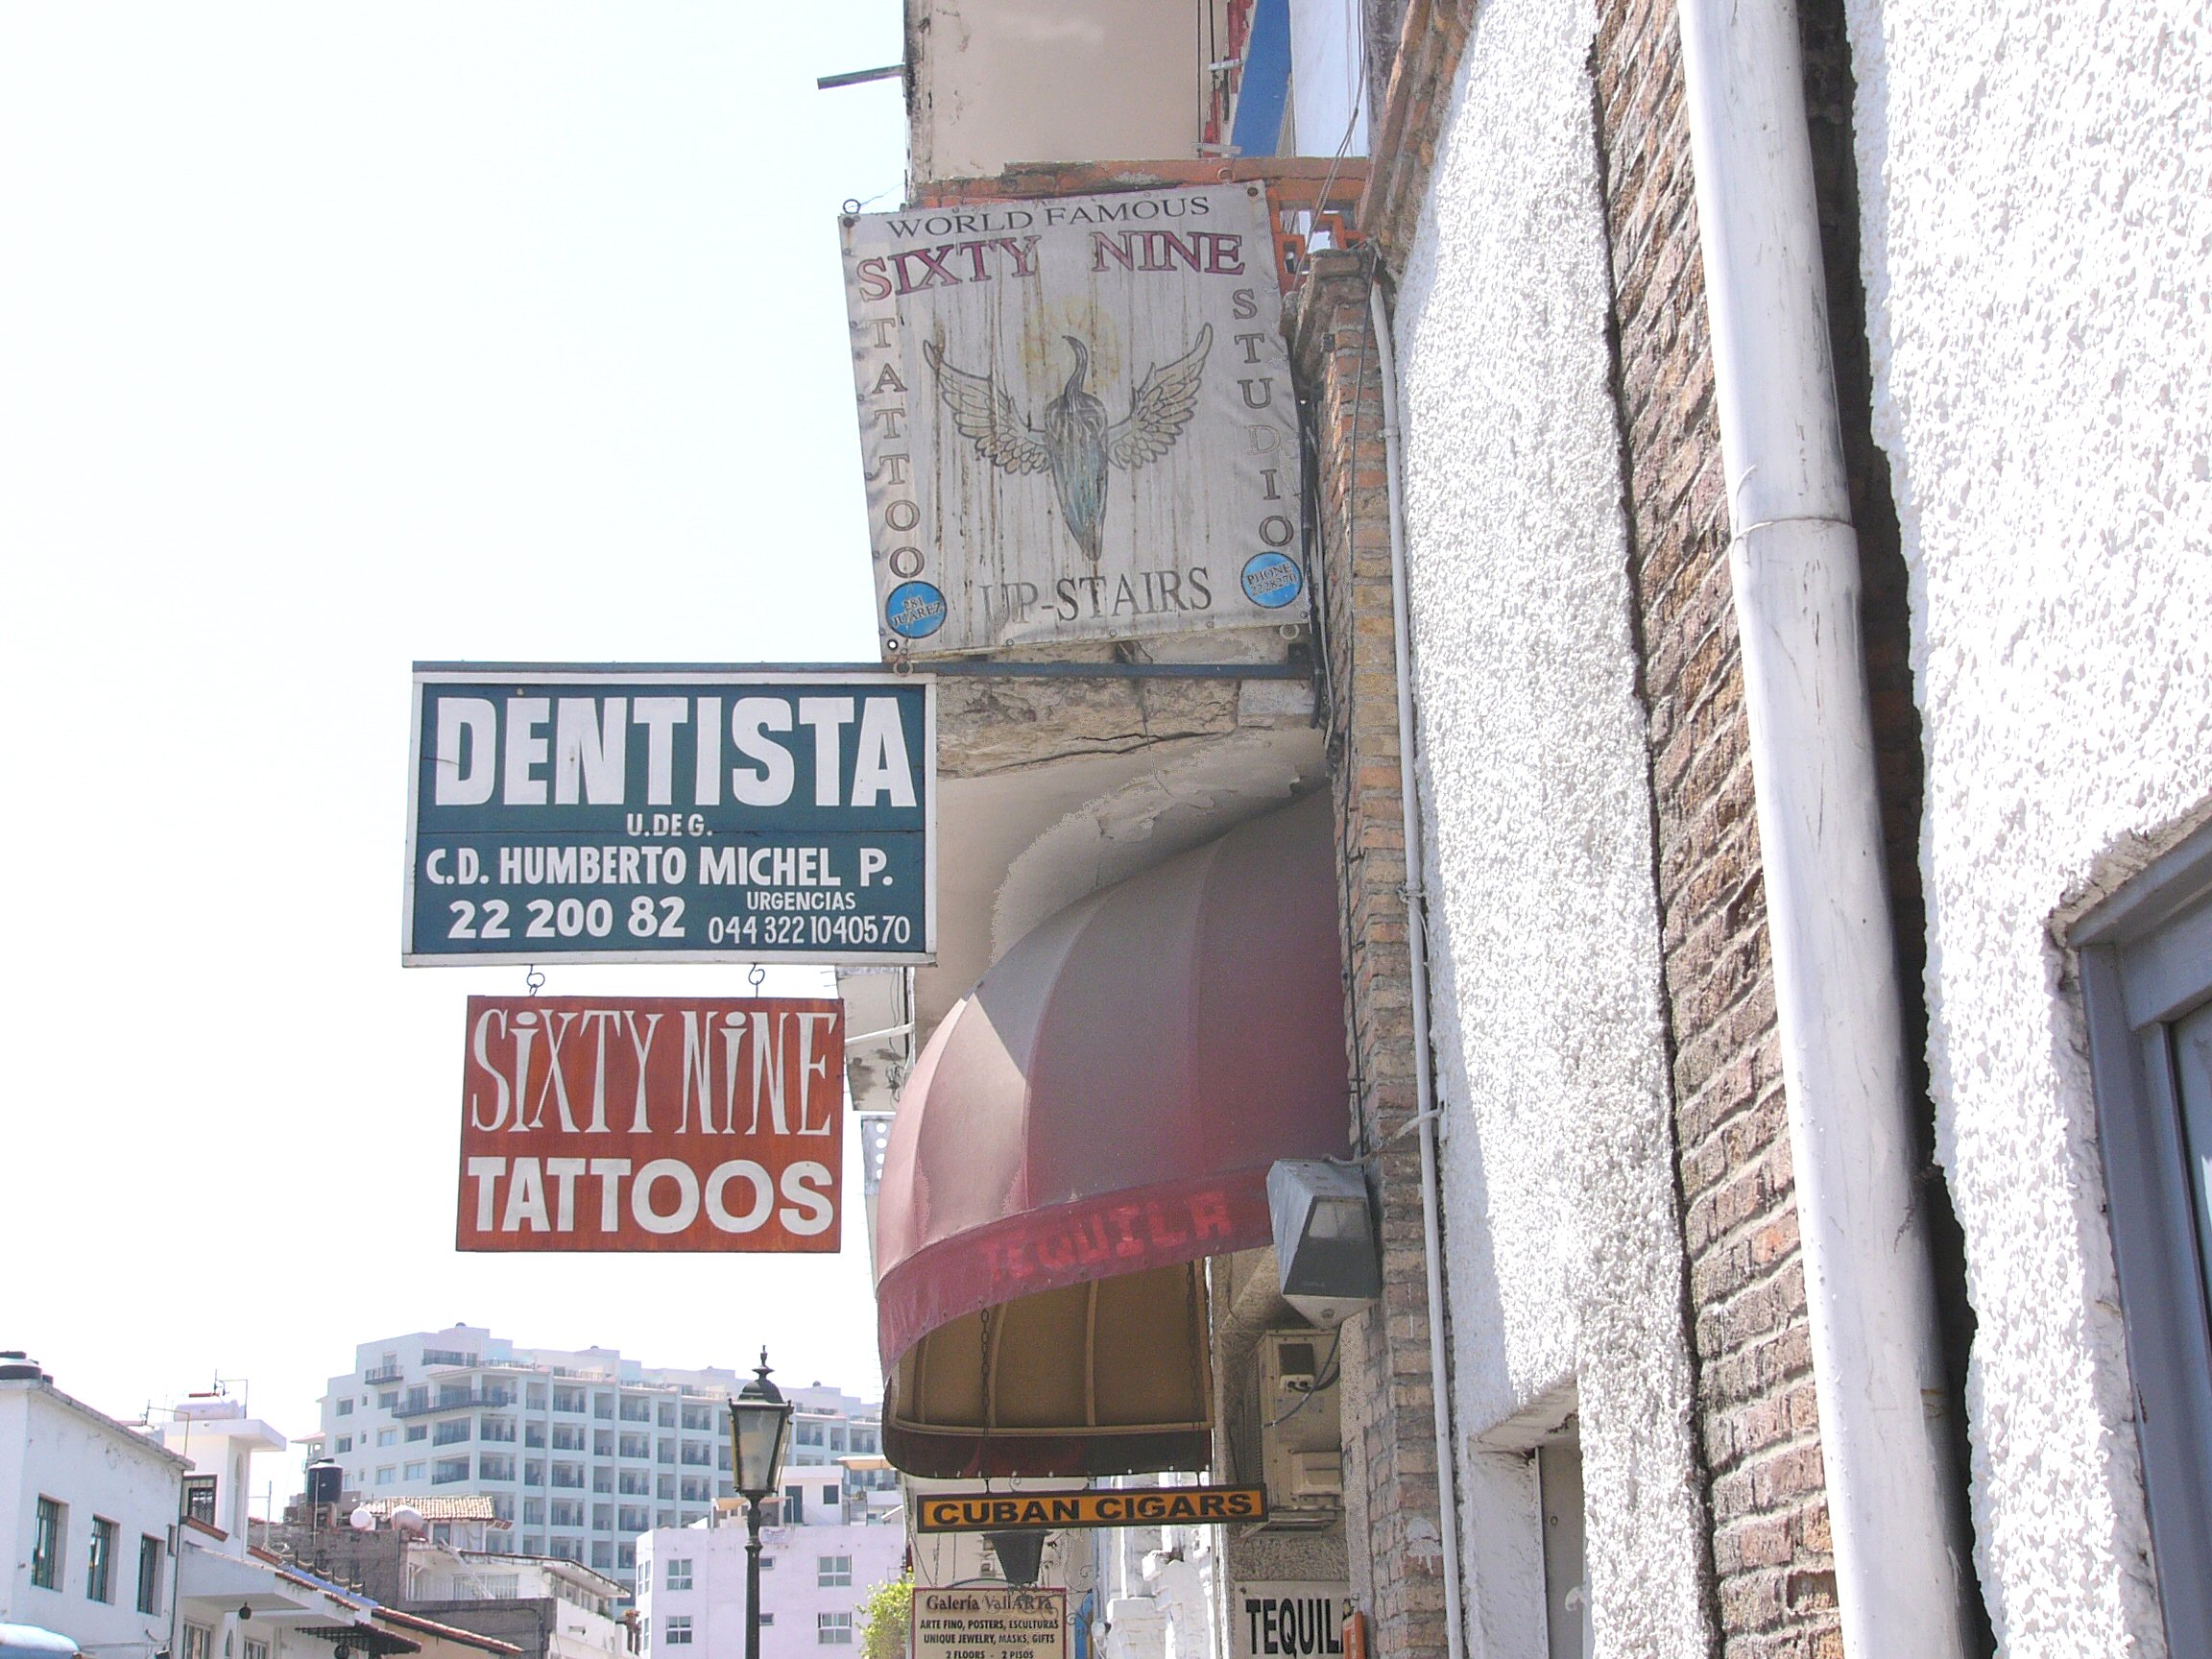 Dentist and tattoos